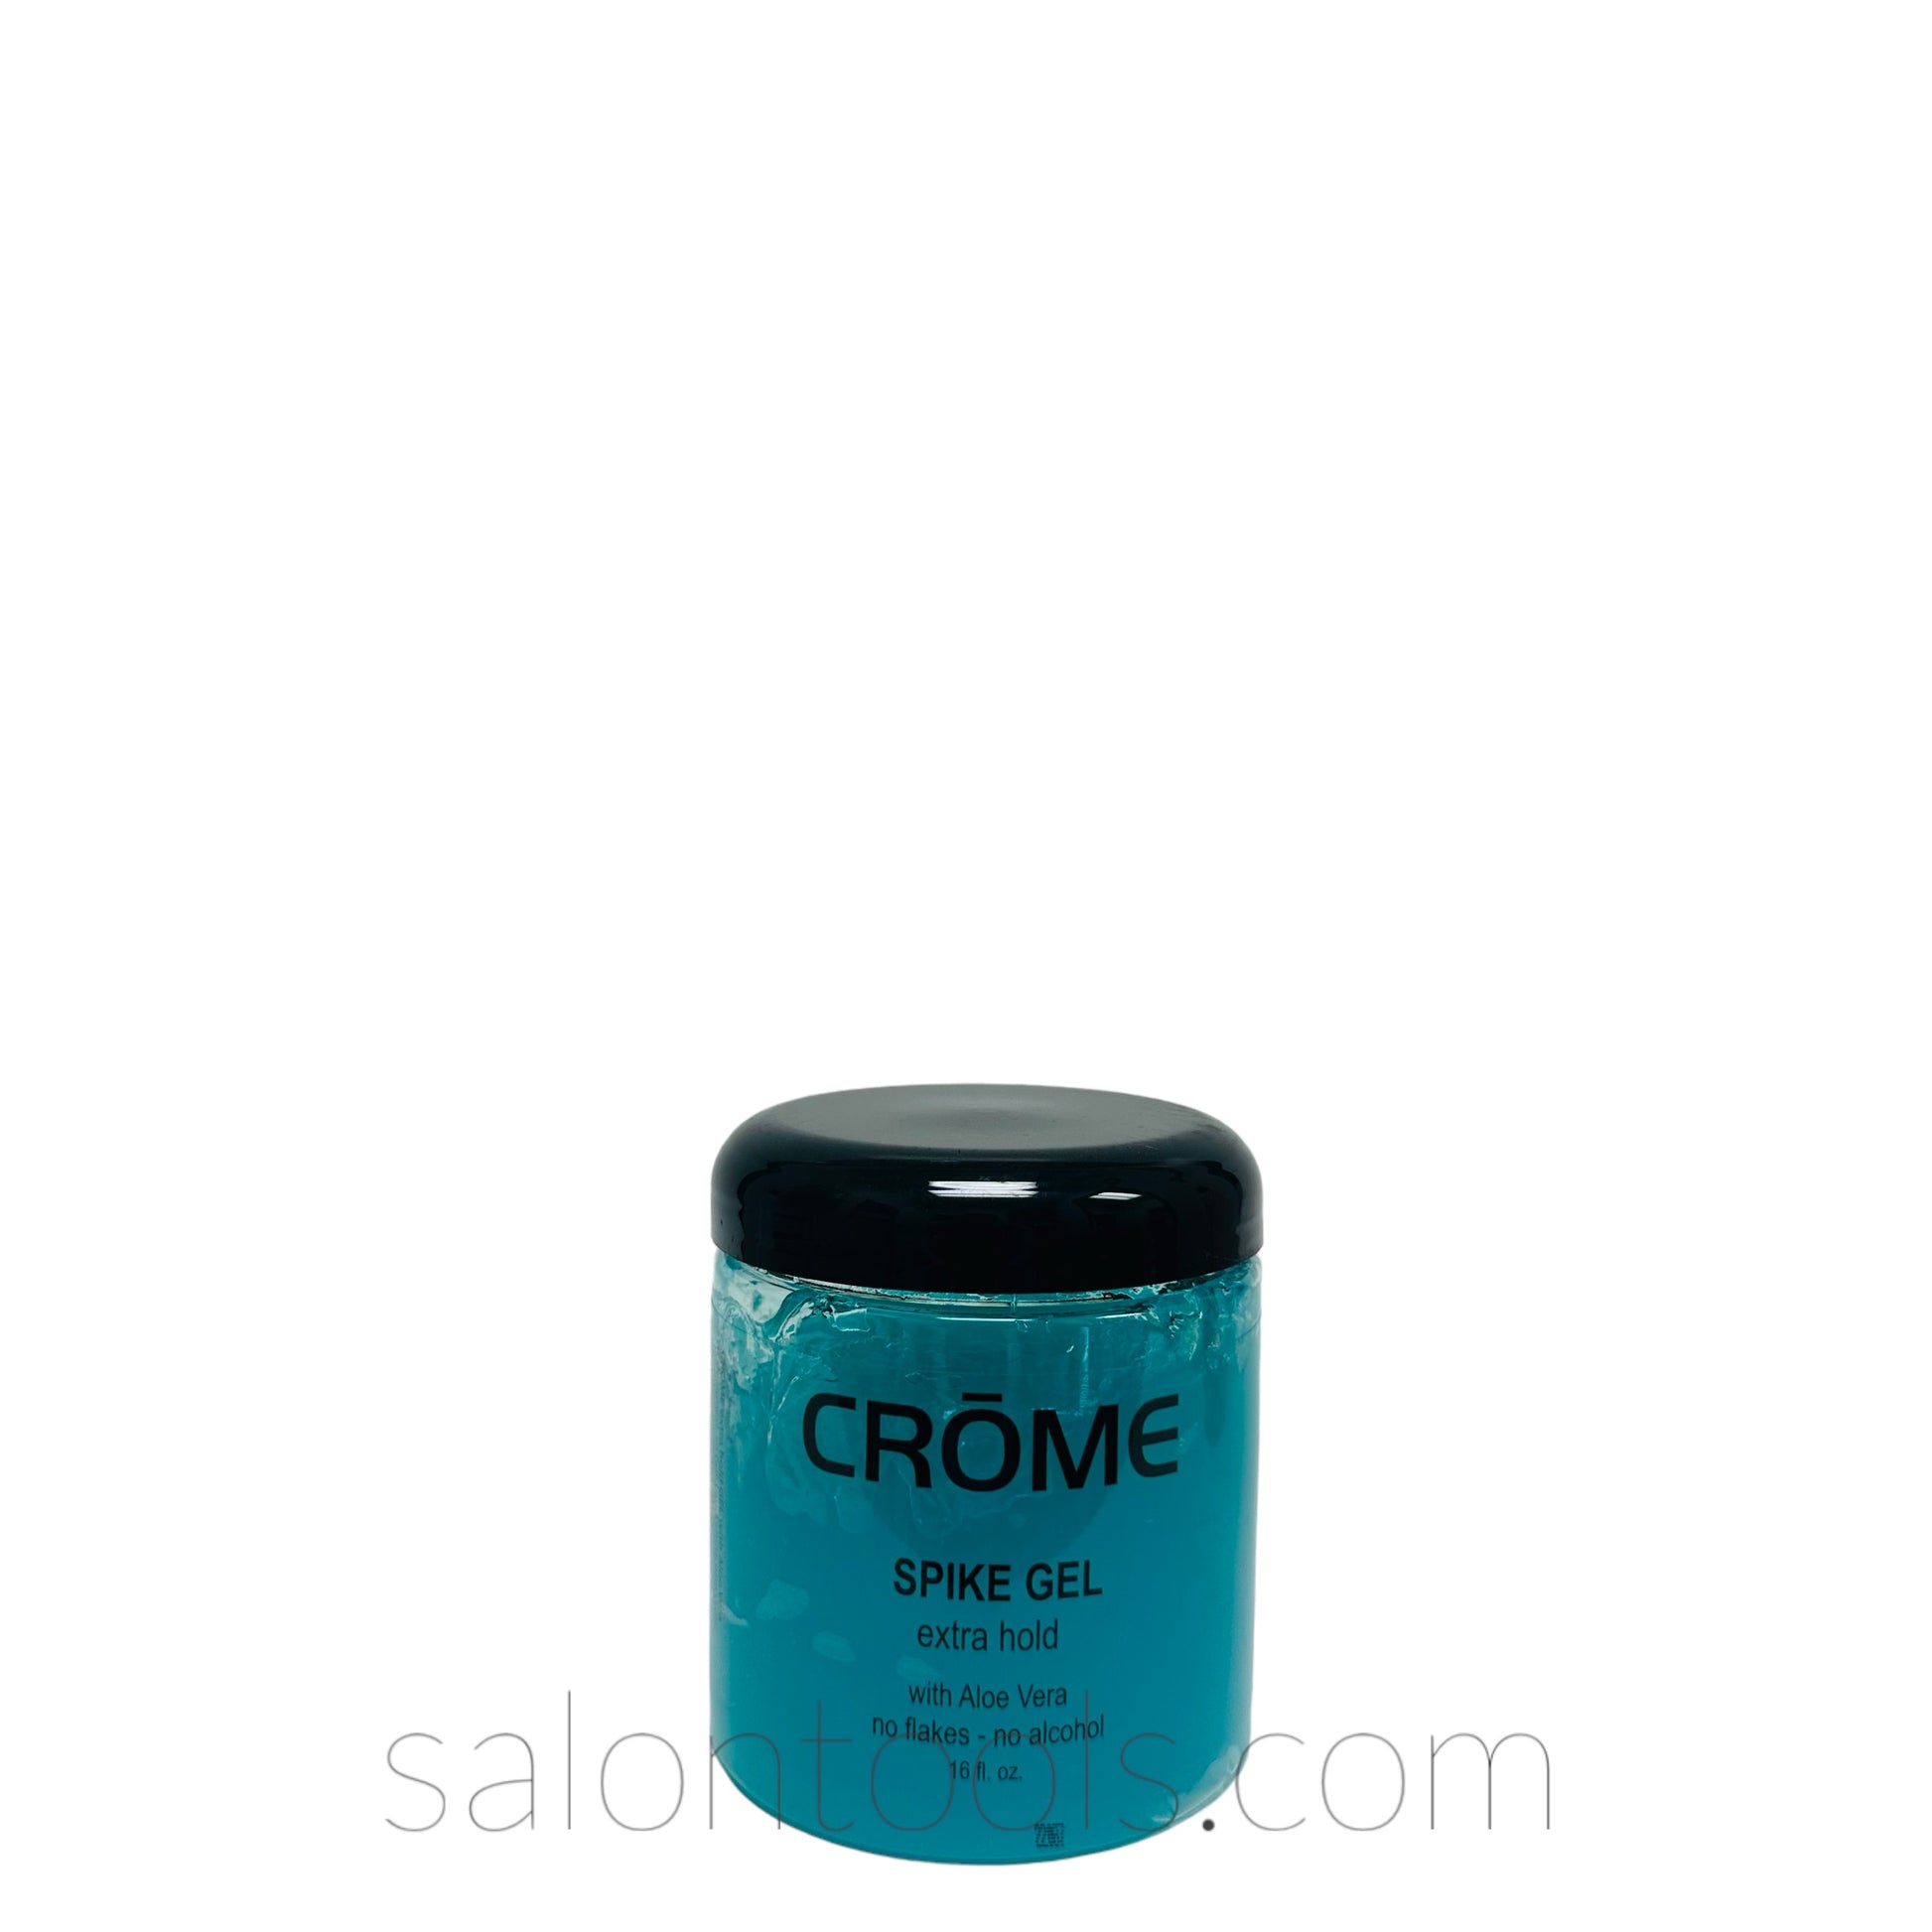 Crome (Alcohol Free) Spike Gel (with Aloe Vera) 16oz